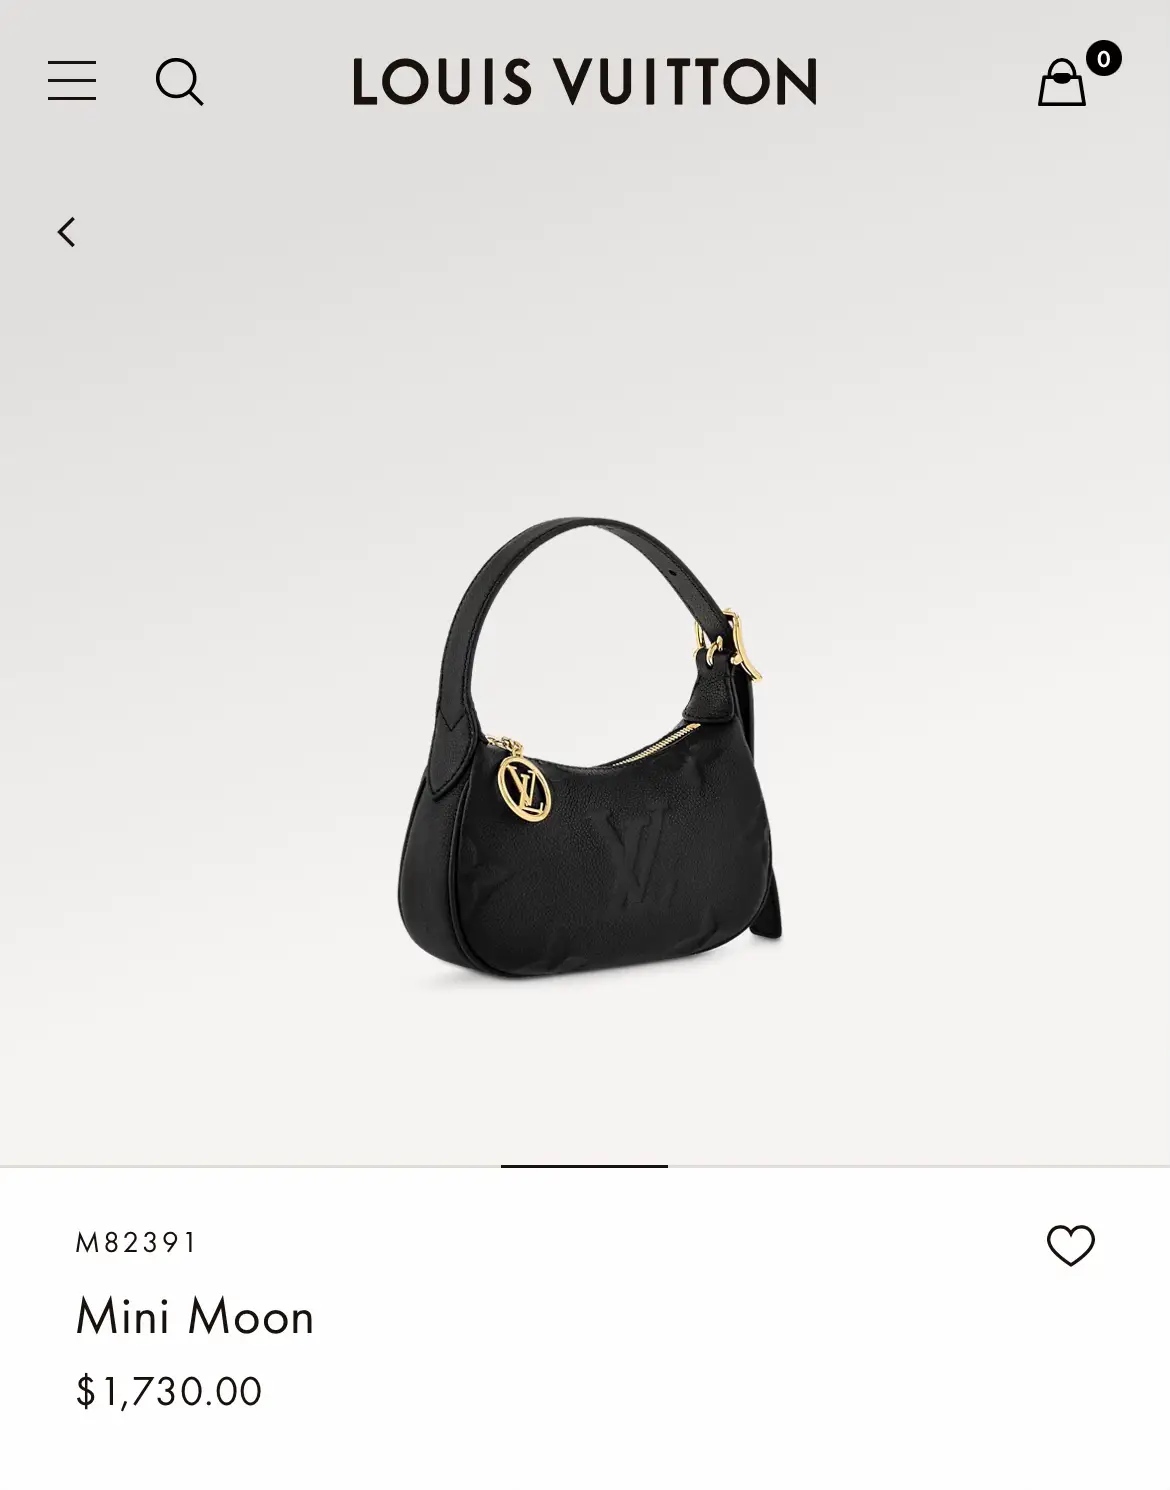 Louis Vuitton Products by Louis Vuitton: Mini Moon $1730.00